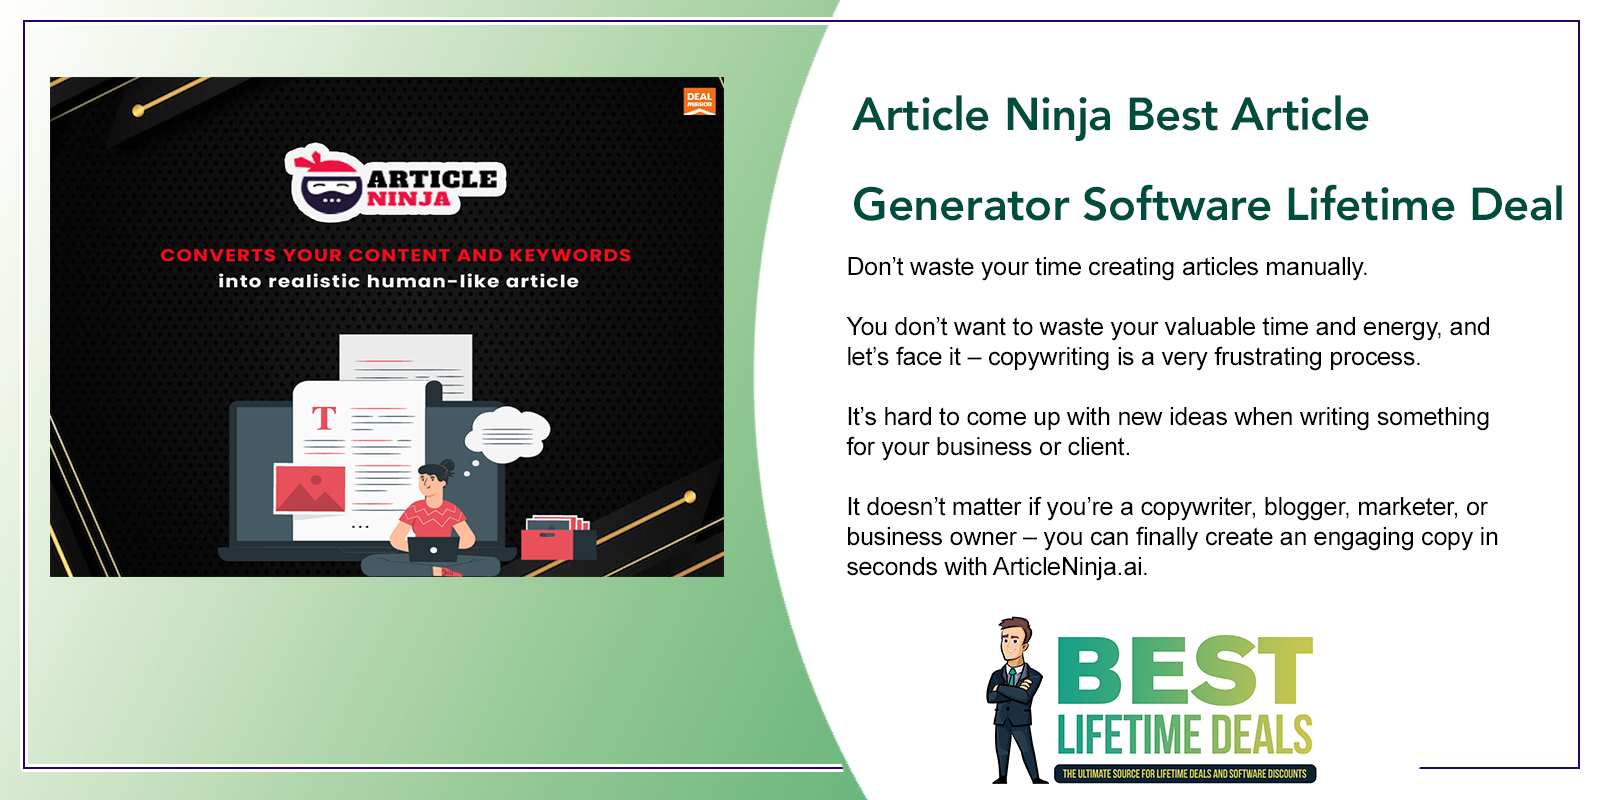 Article Ninja Best Article Generator Software Lifetime Deal Featured Image